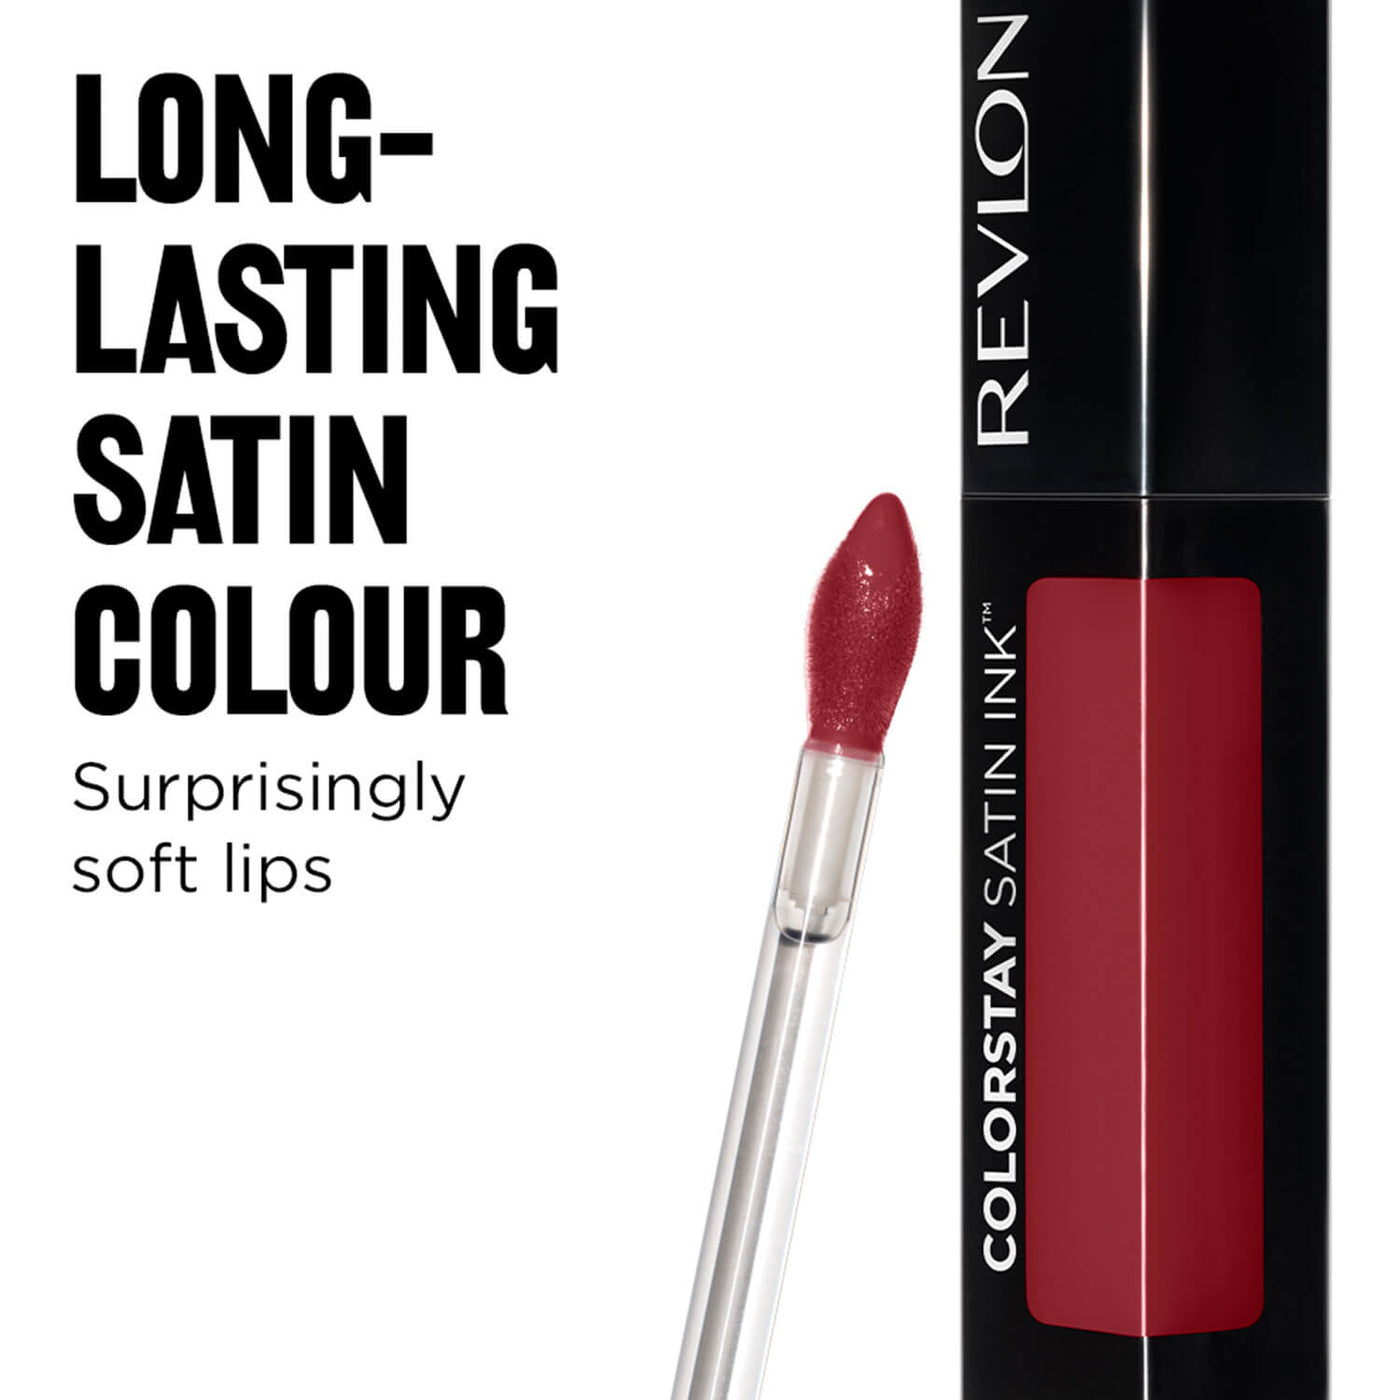 Revlon Colorstay Satin Ink Liquid Lip Color